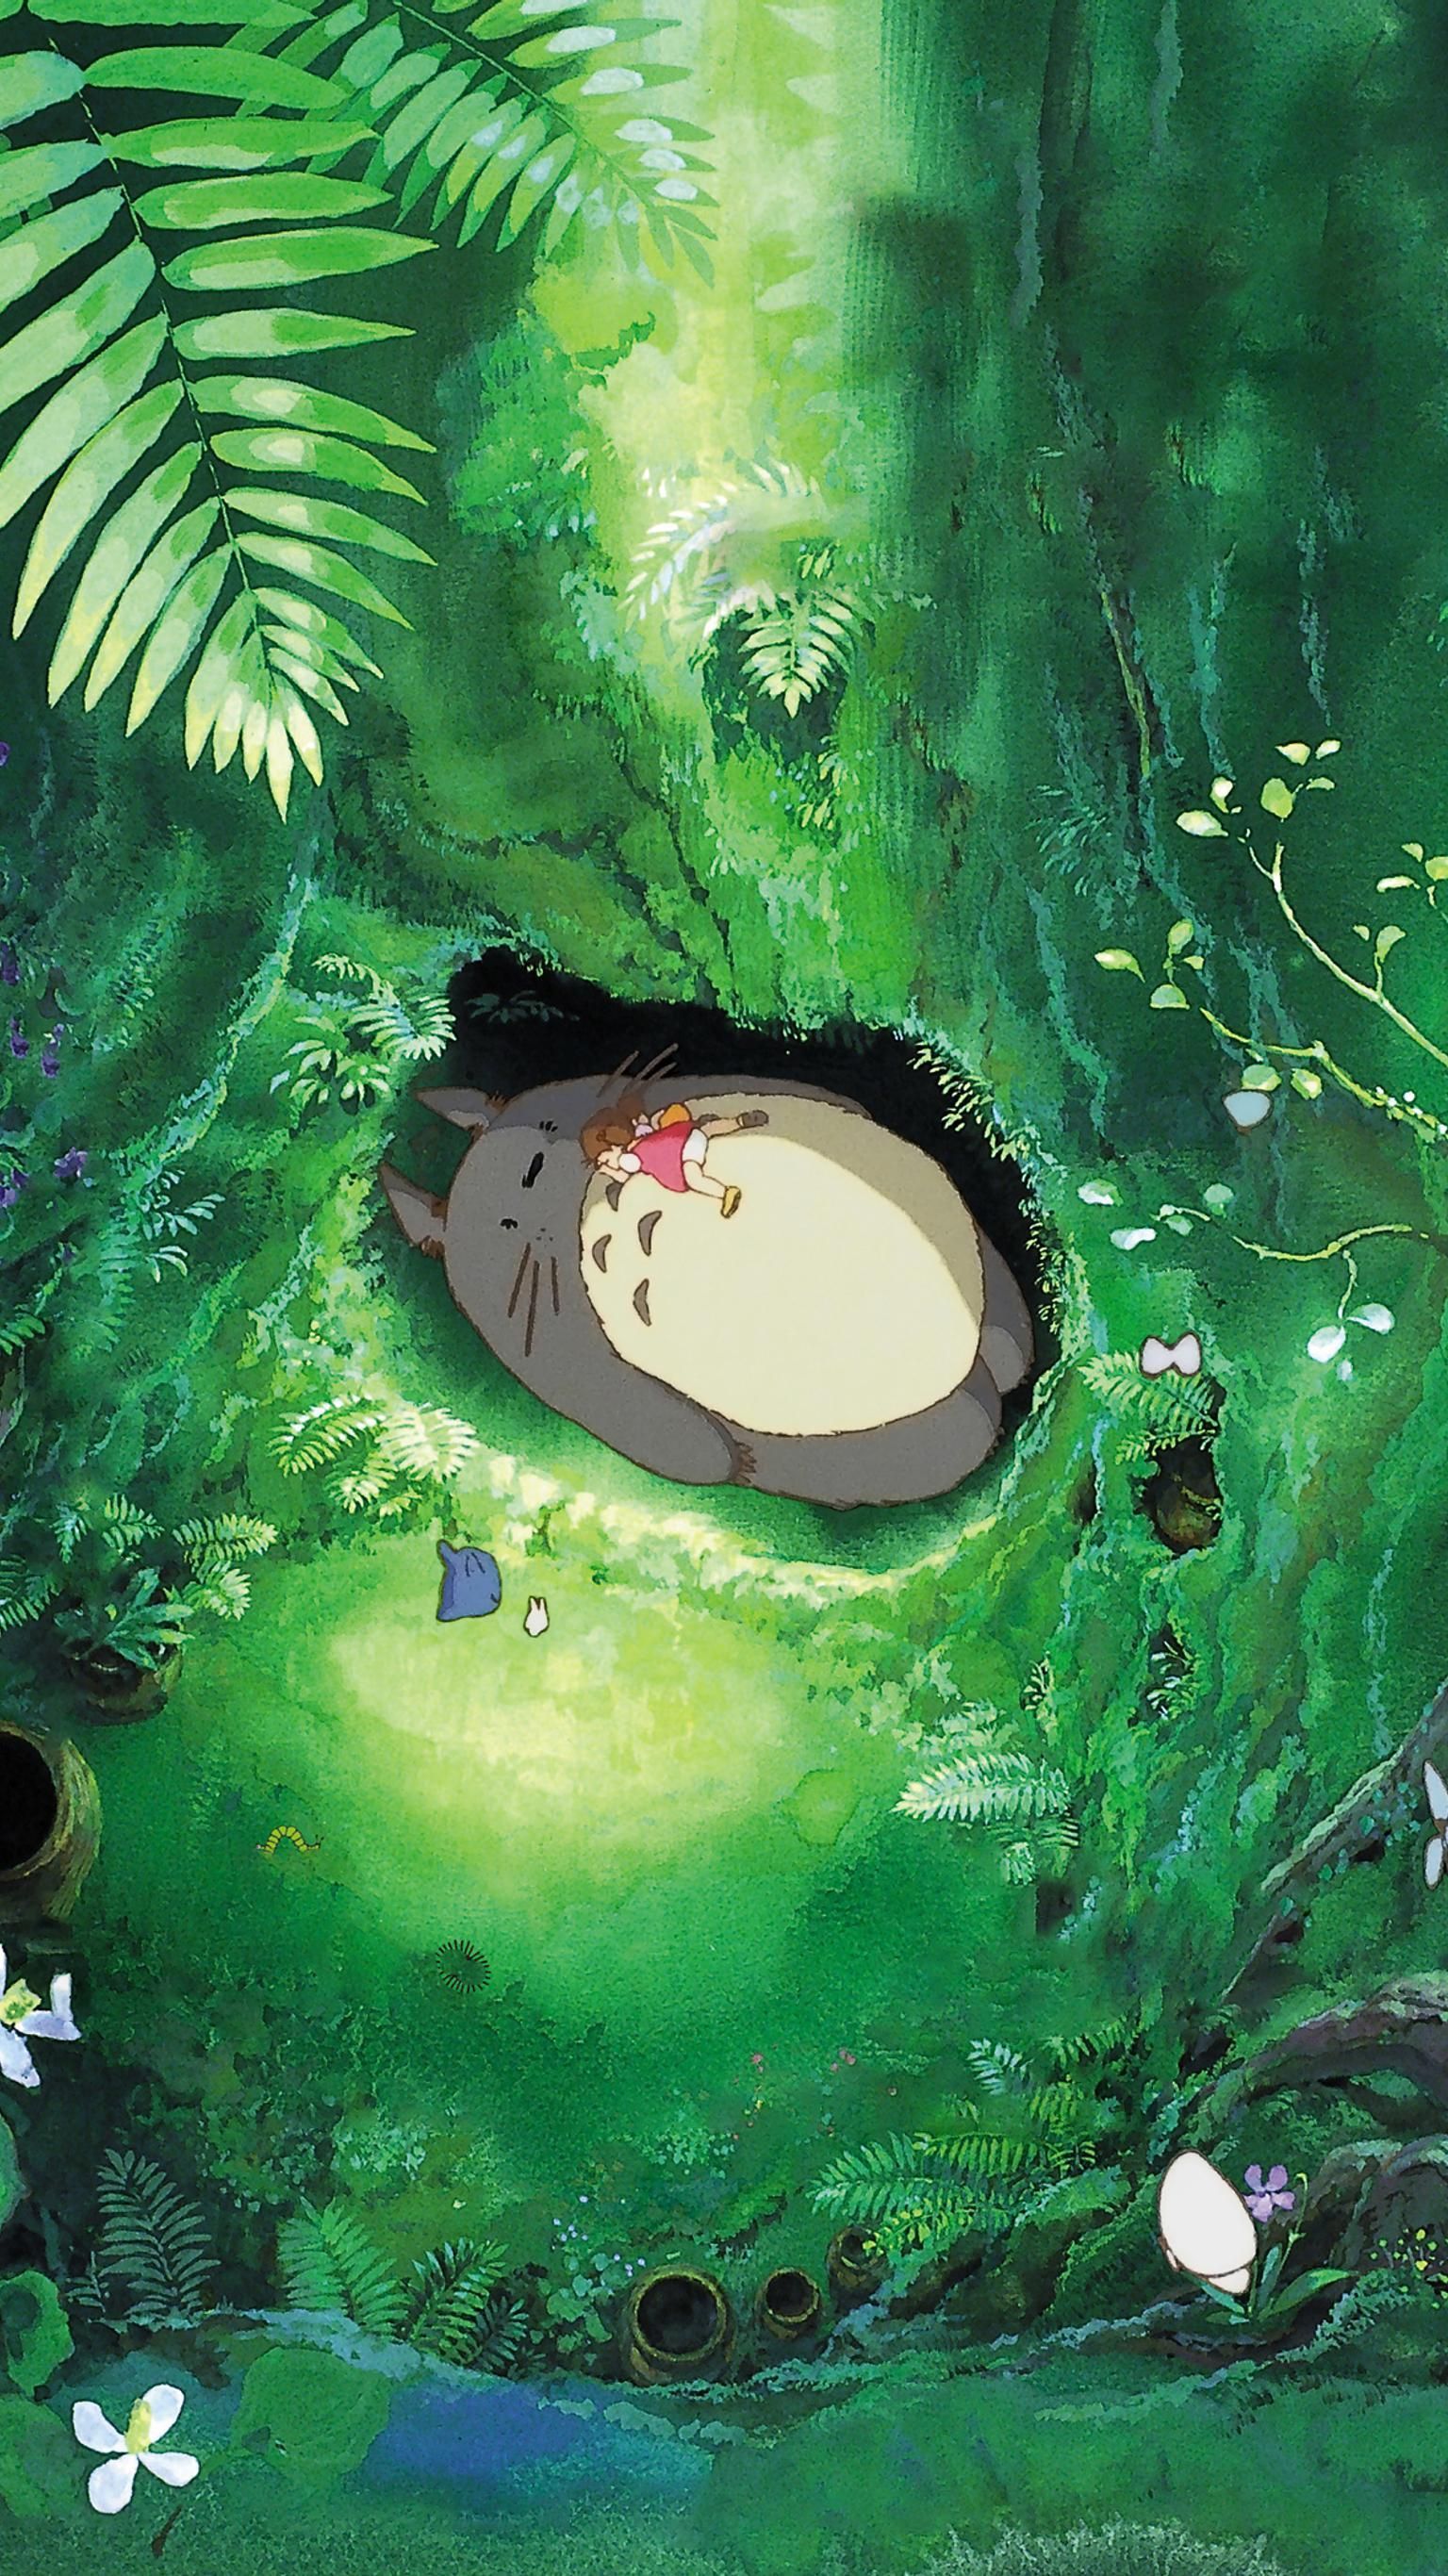 My Neighbor Totoro (1988) Phone Wallpaper. Moviemania. Studio ghibli poster, Ghibli art, Studio ghibli background